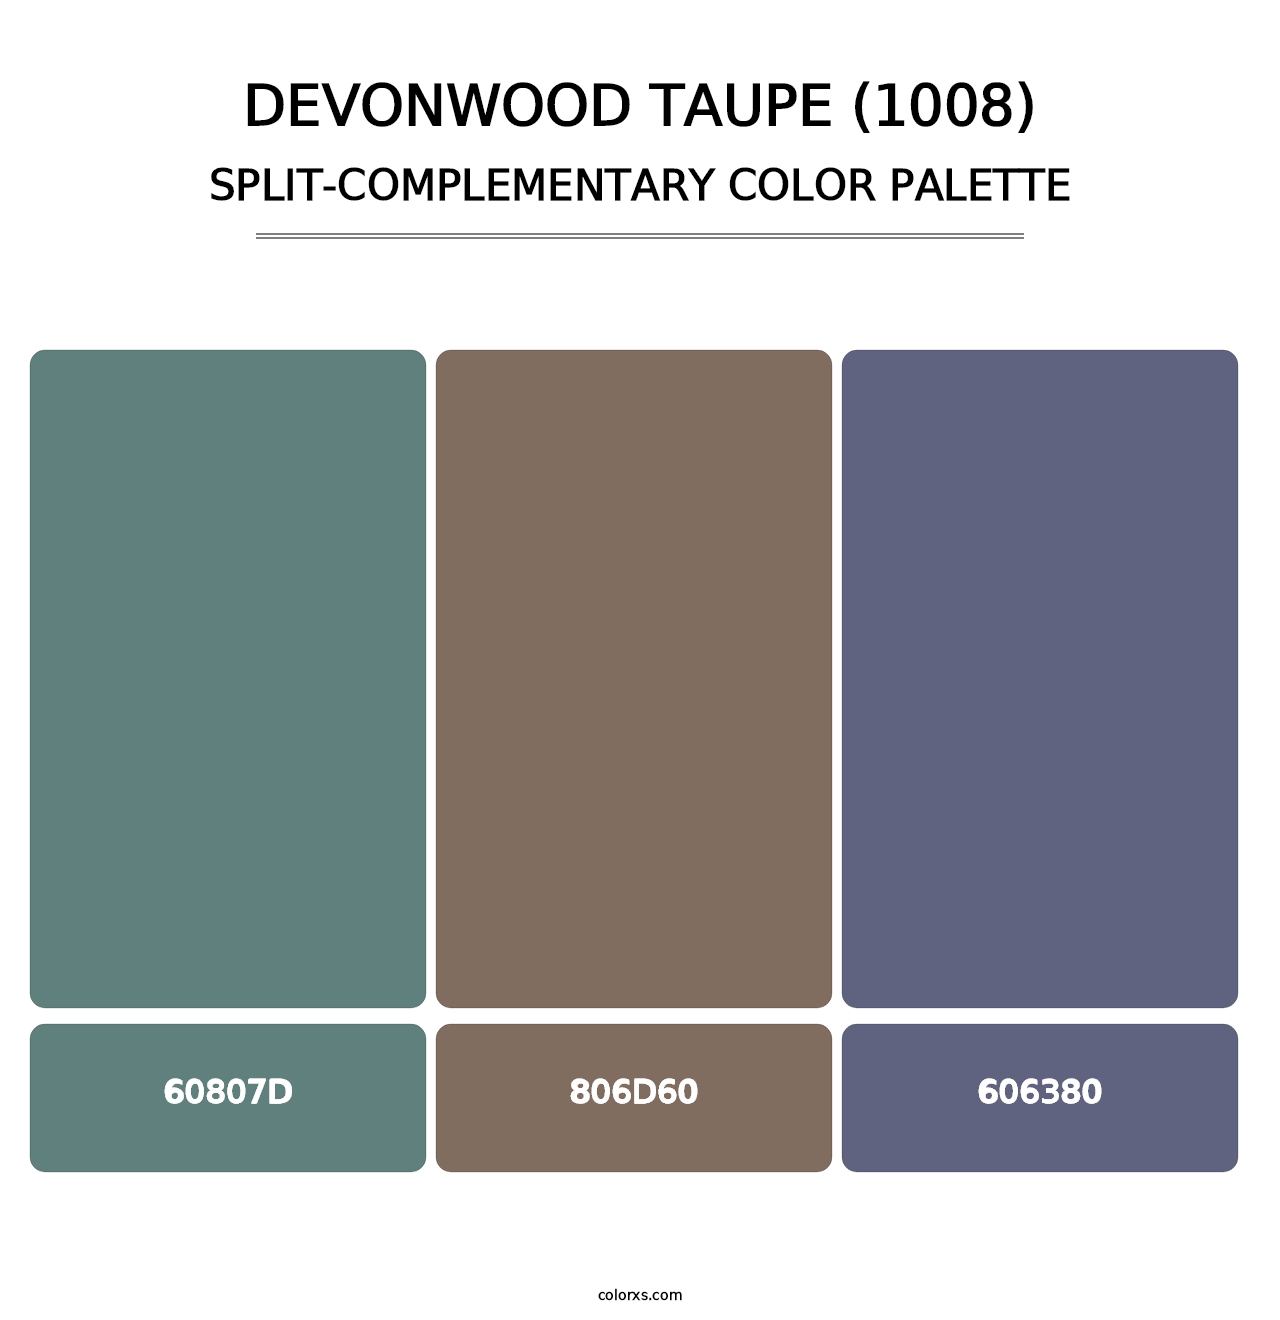 Devonwood Taupe (1008) - Split-Complementary Color Palette